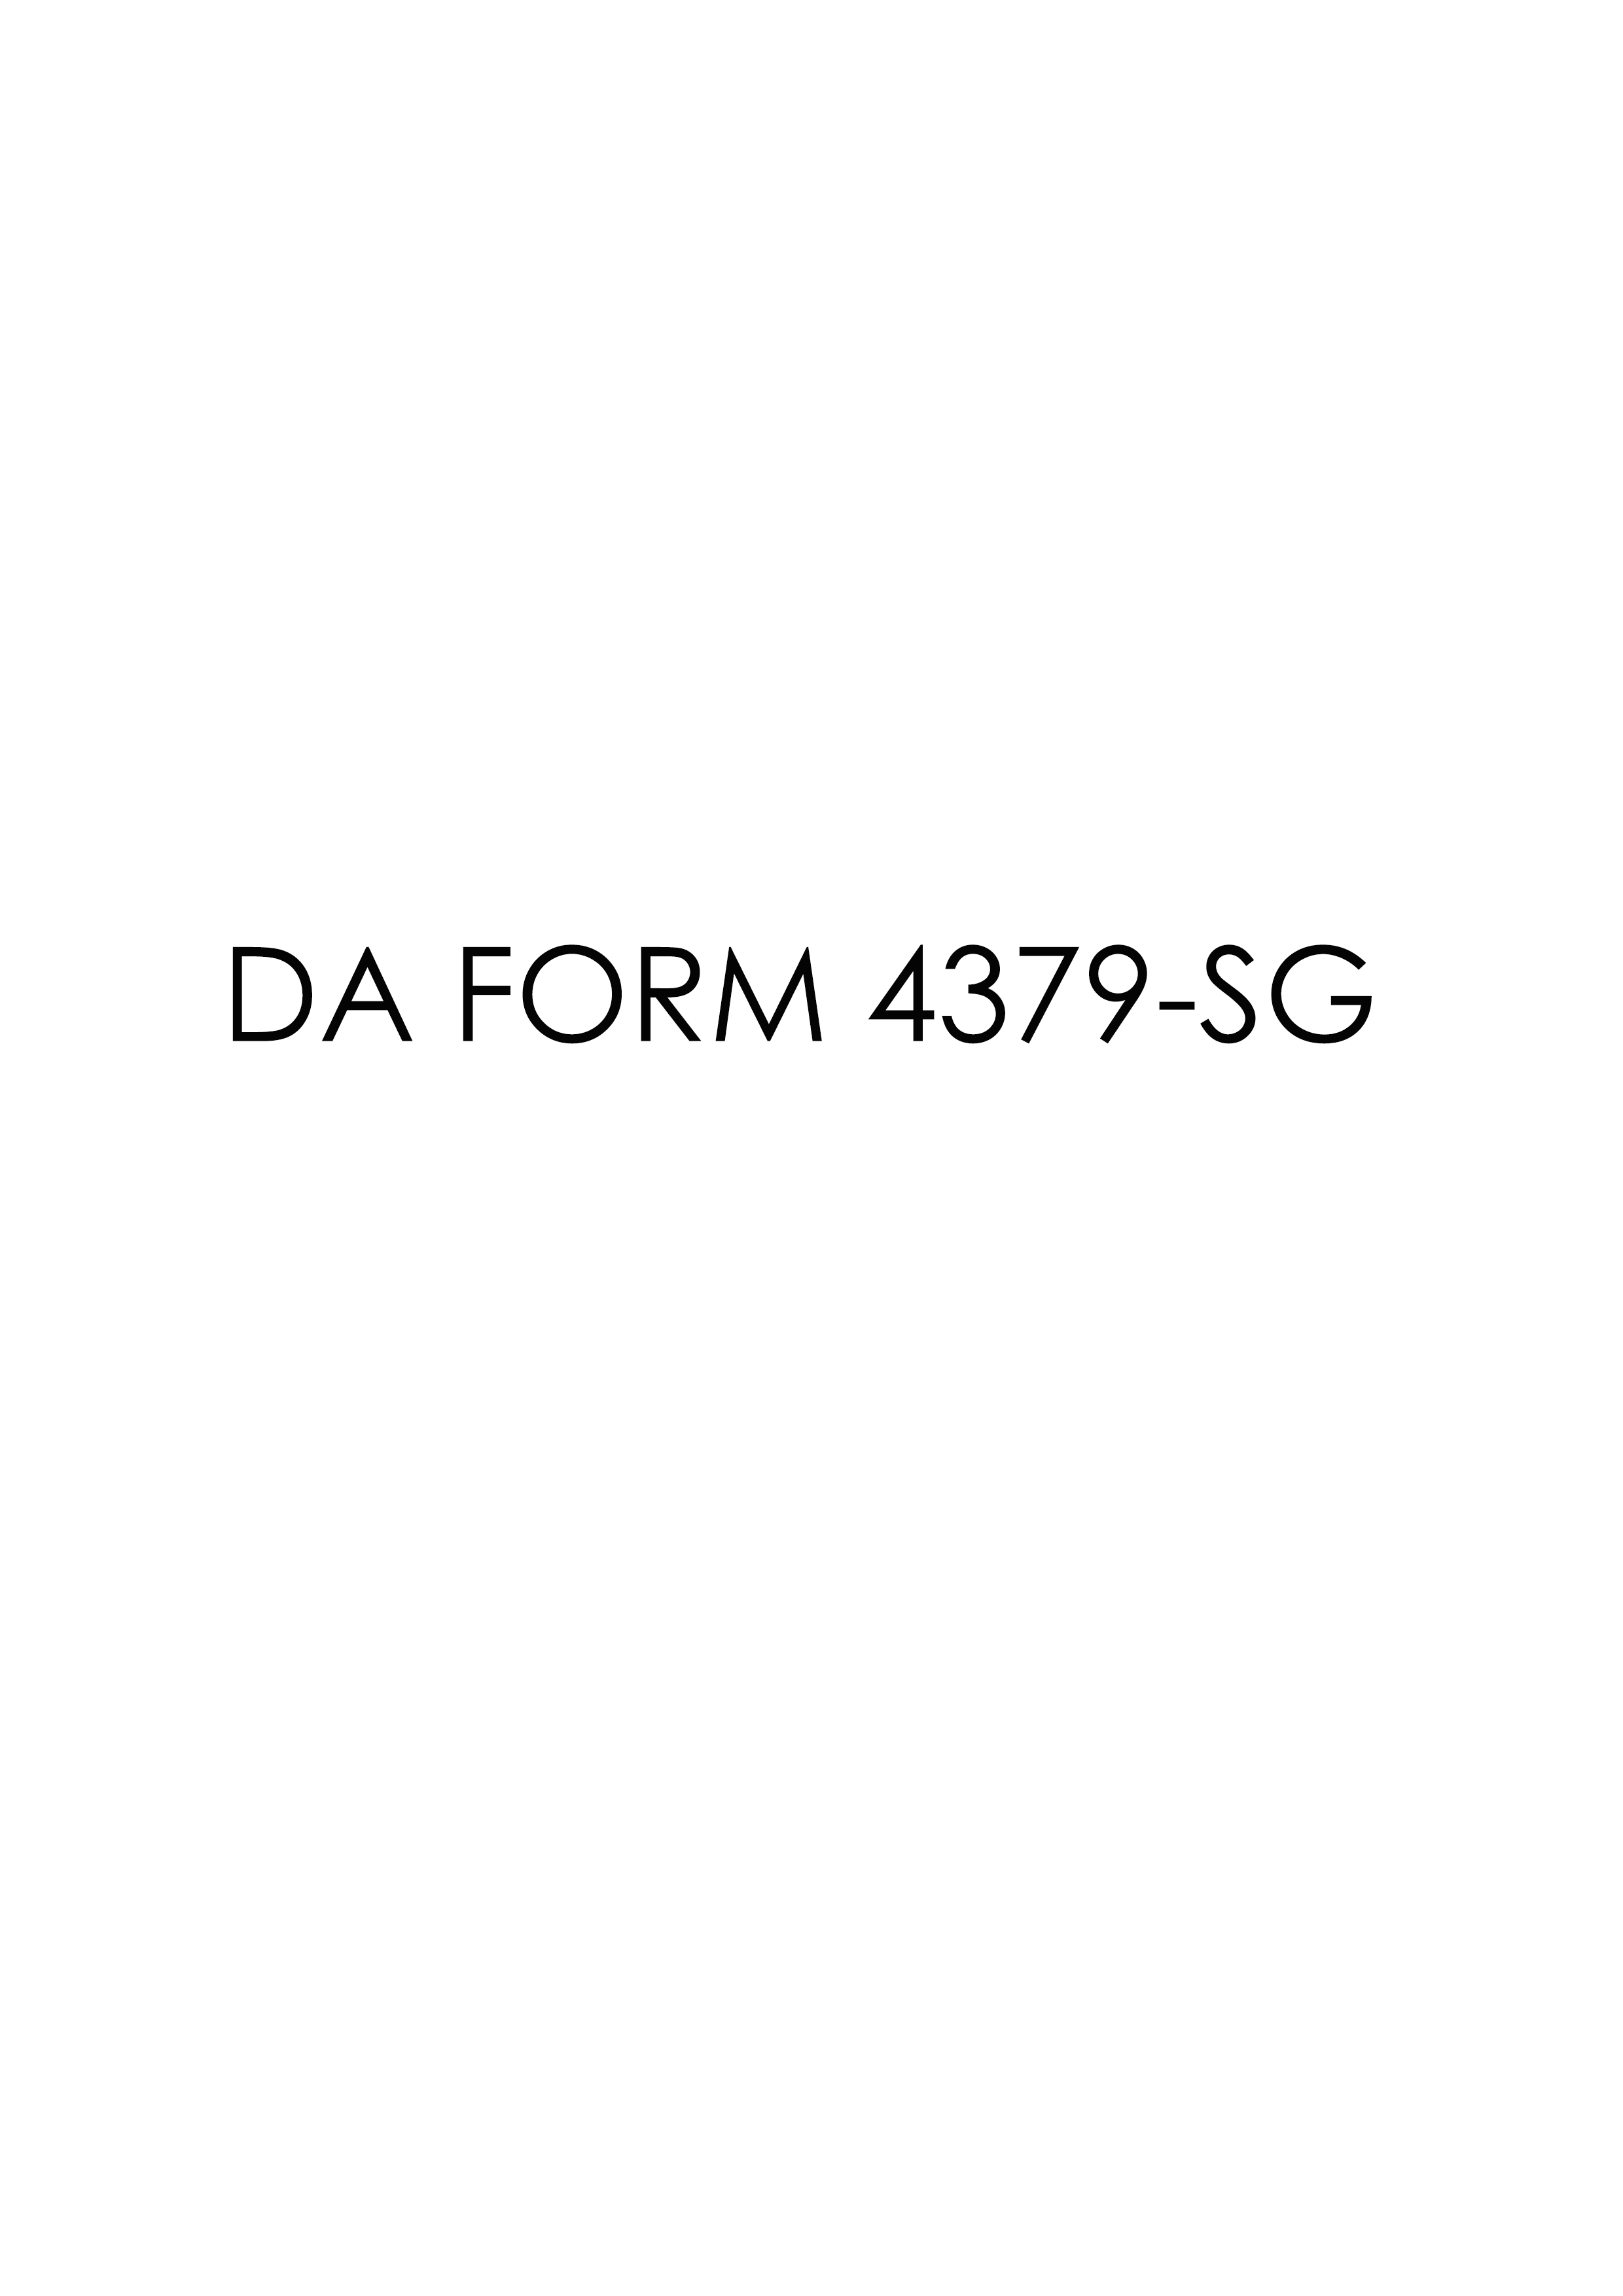 da Form 4379-SG fillable